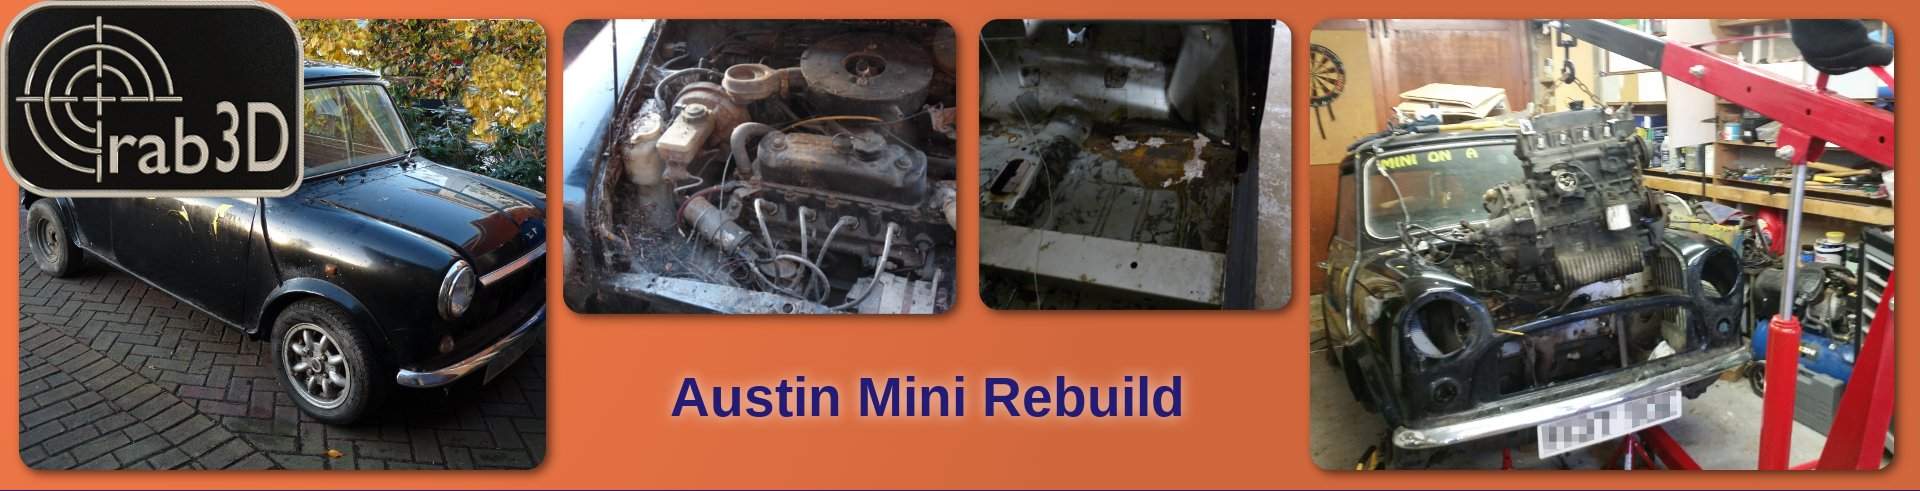 Austin Mini Rebuild